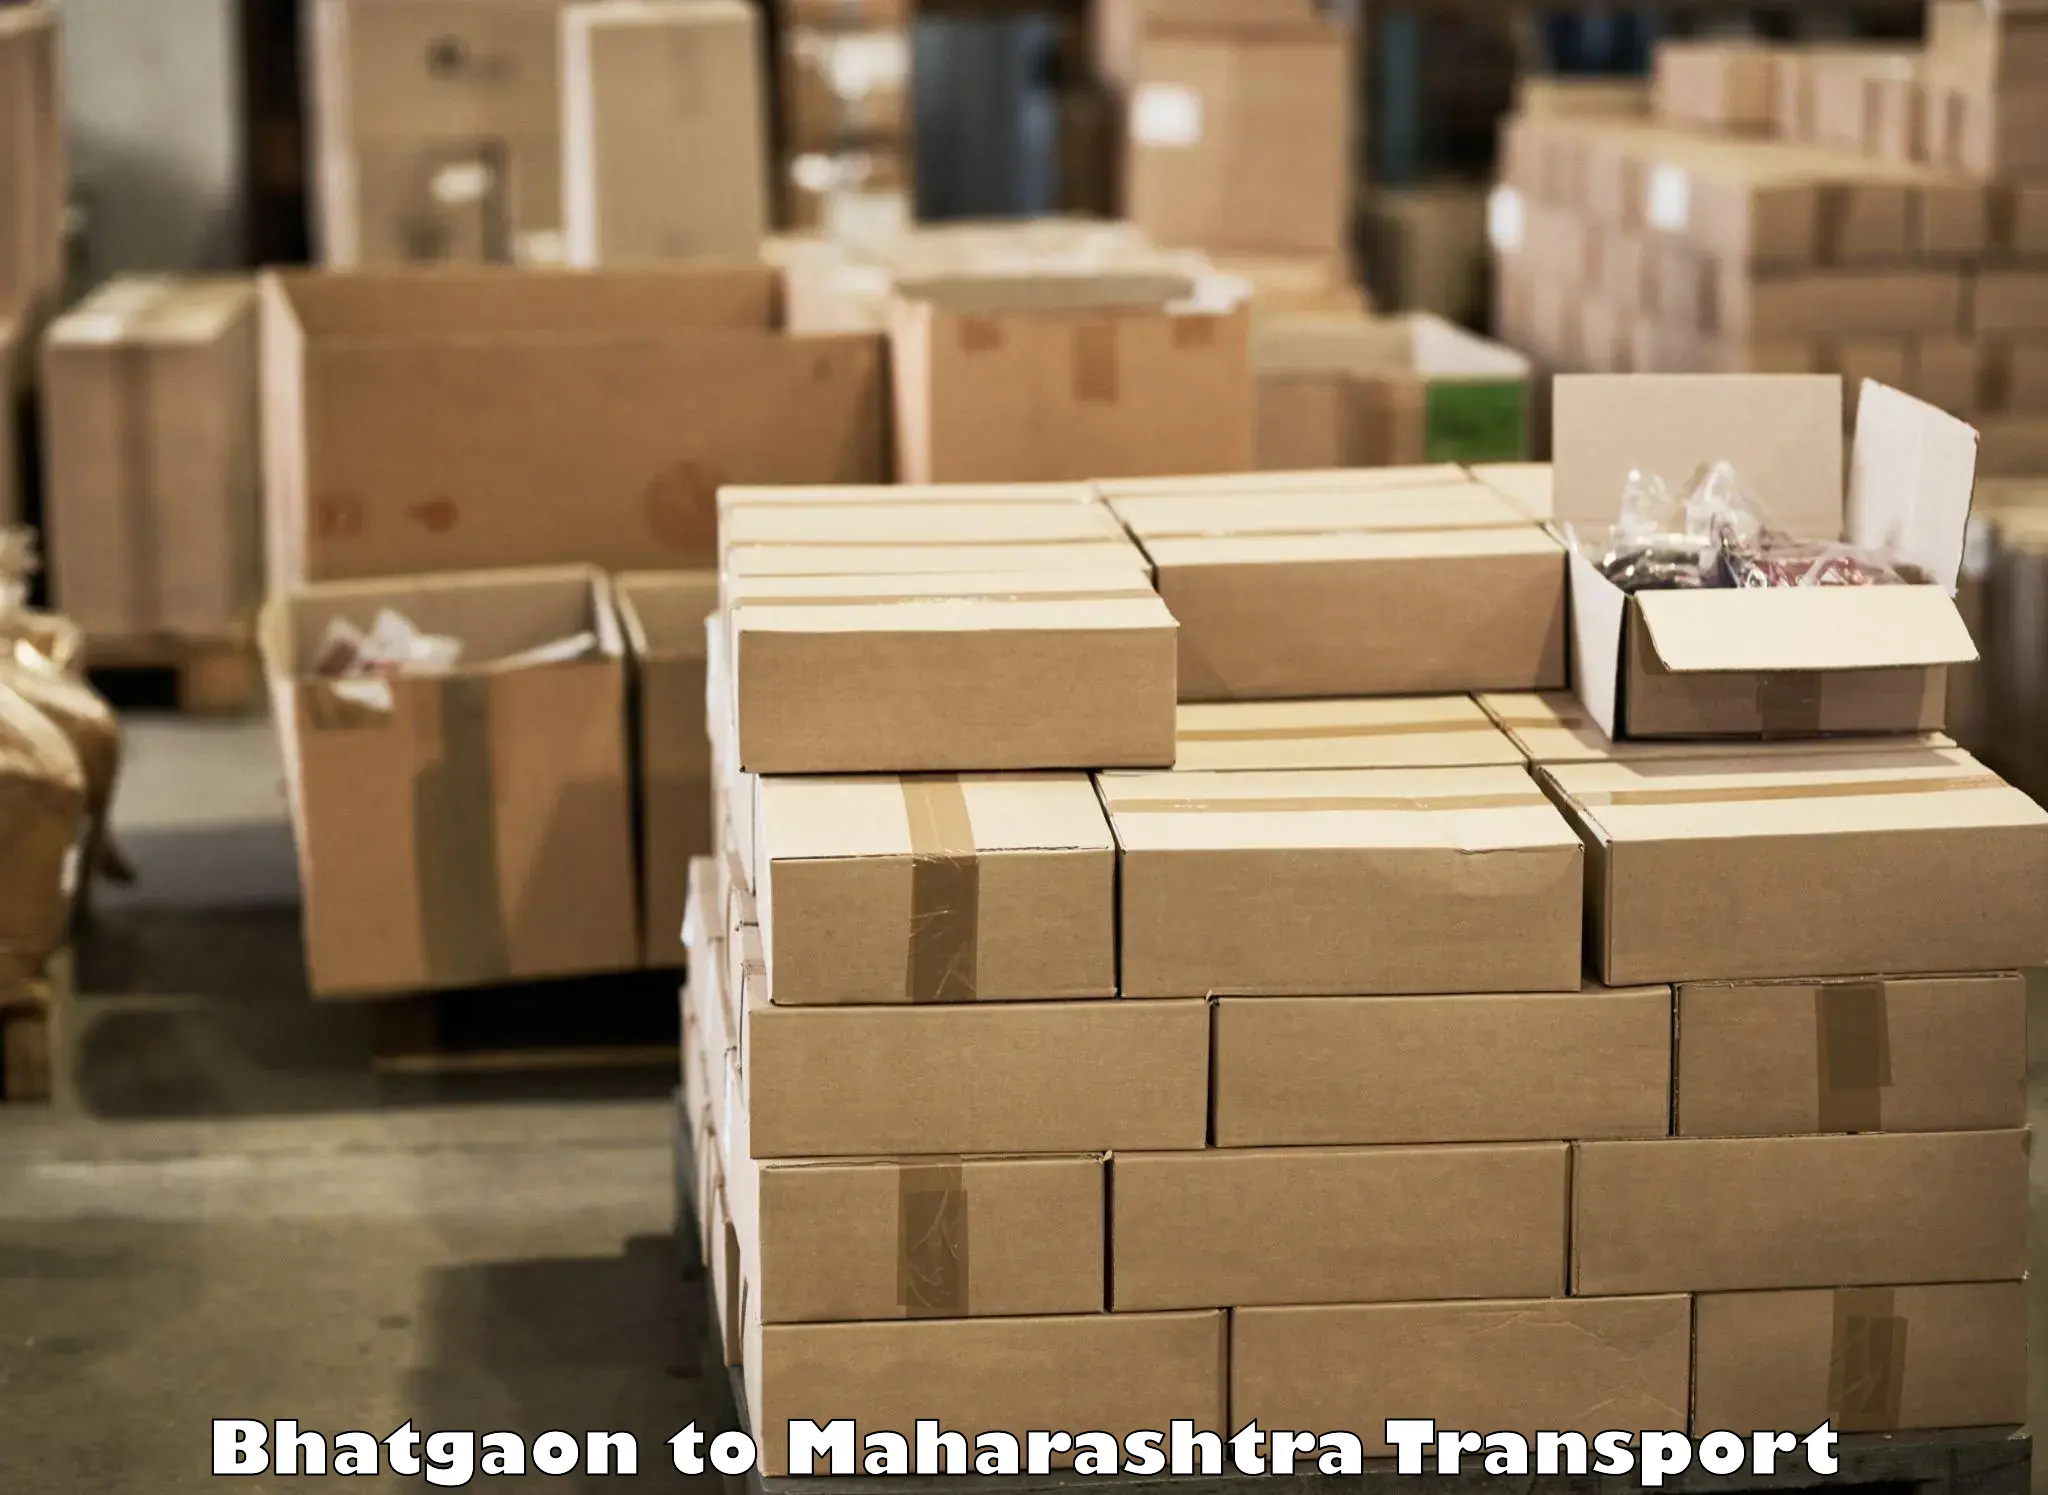 Shipping partner Bhatgaon to Borivali